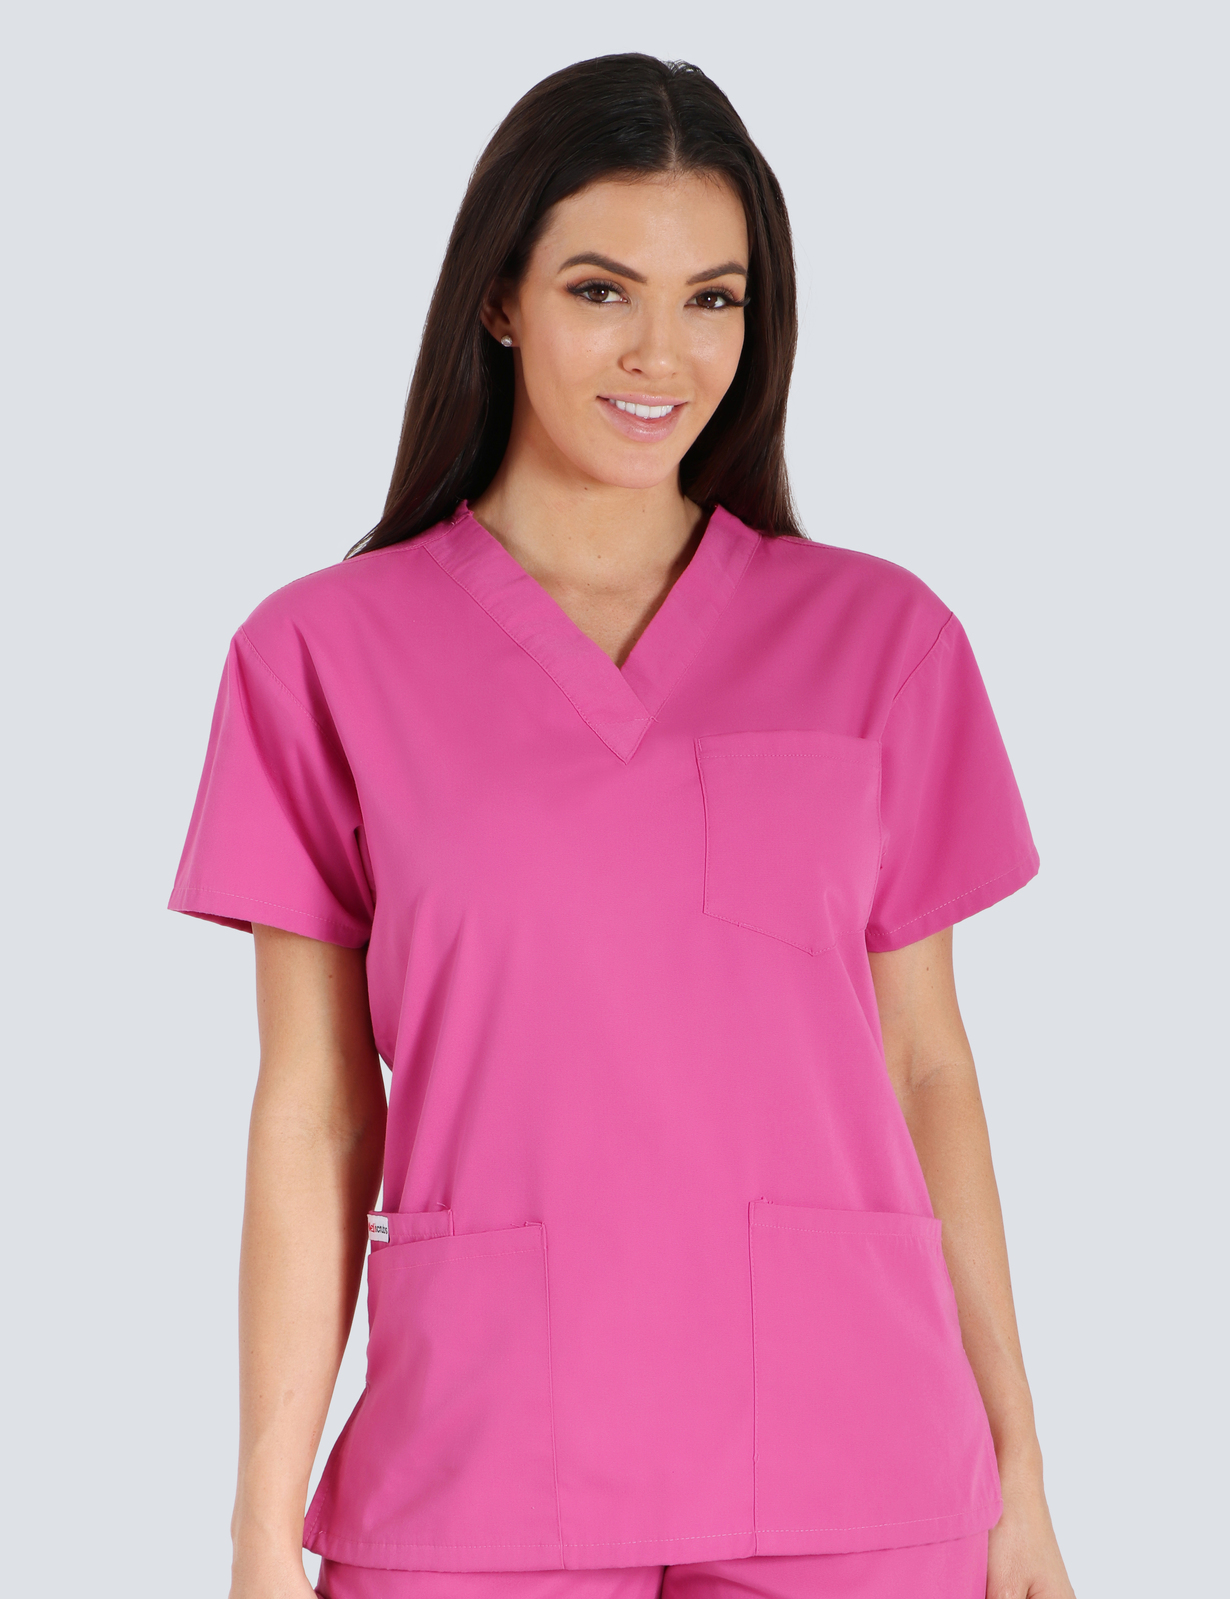 Queensland Children's Hospital Emergency Department Clinical Nurse  Uniform Top Bundle  (4 Pocket Top in Pink  incl Logos)